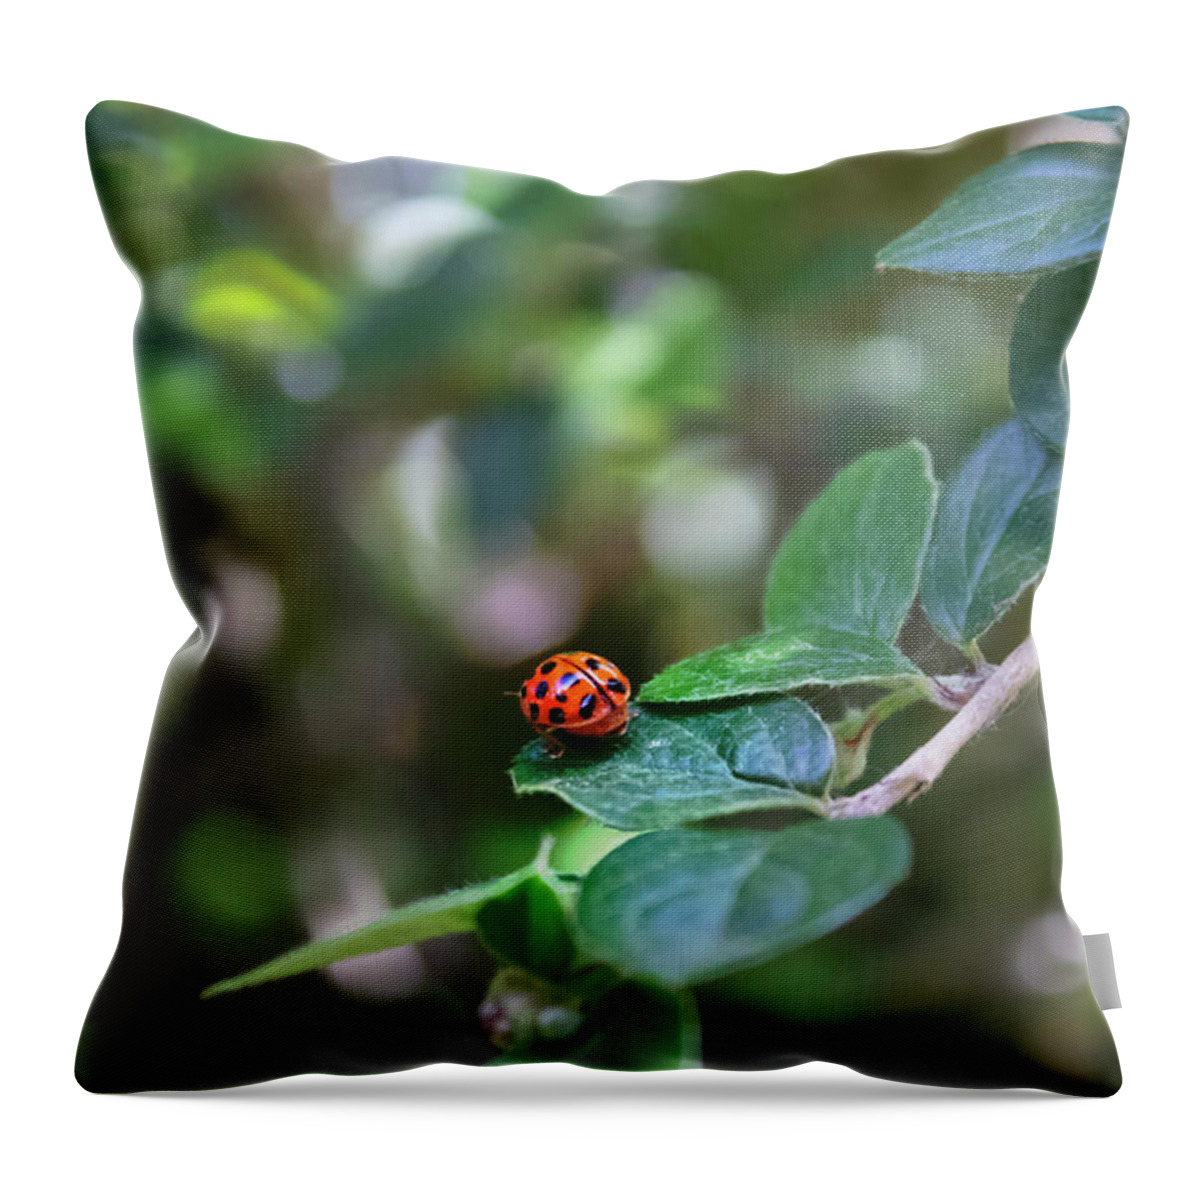 Ladybug Throw Pillow featuring the photograph Ladybug by MPhotographer